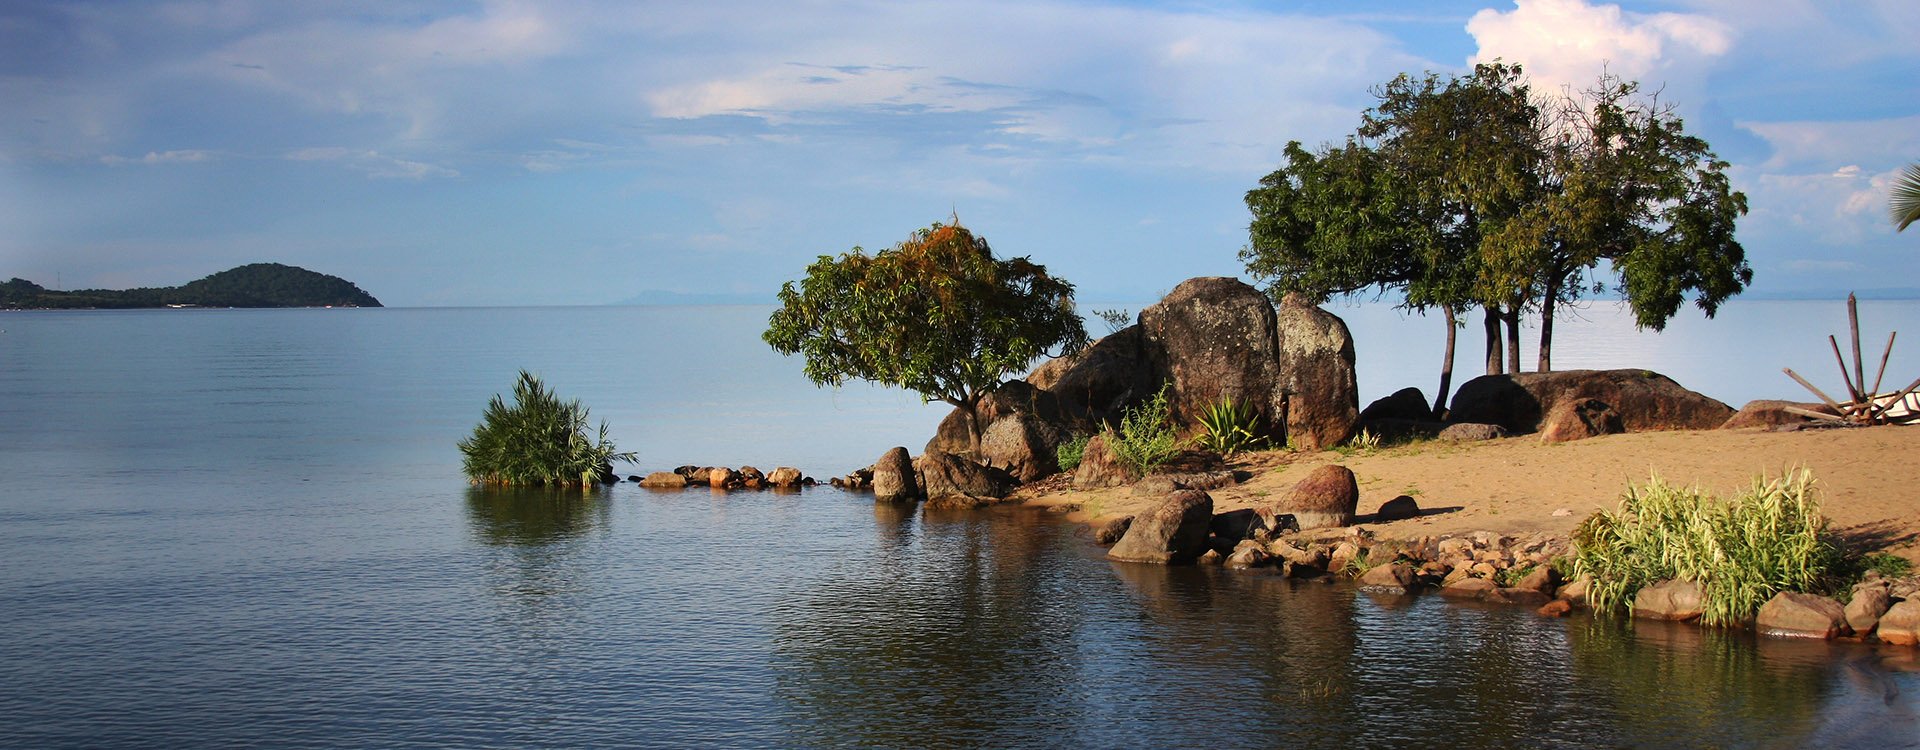 Lake Malawi in Africa